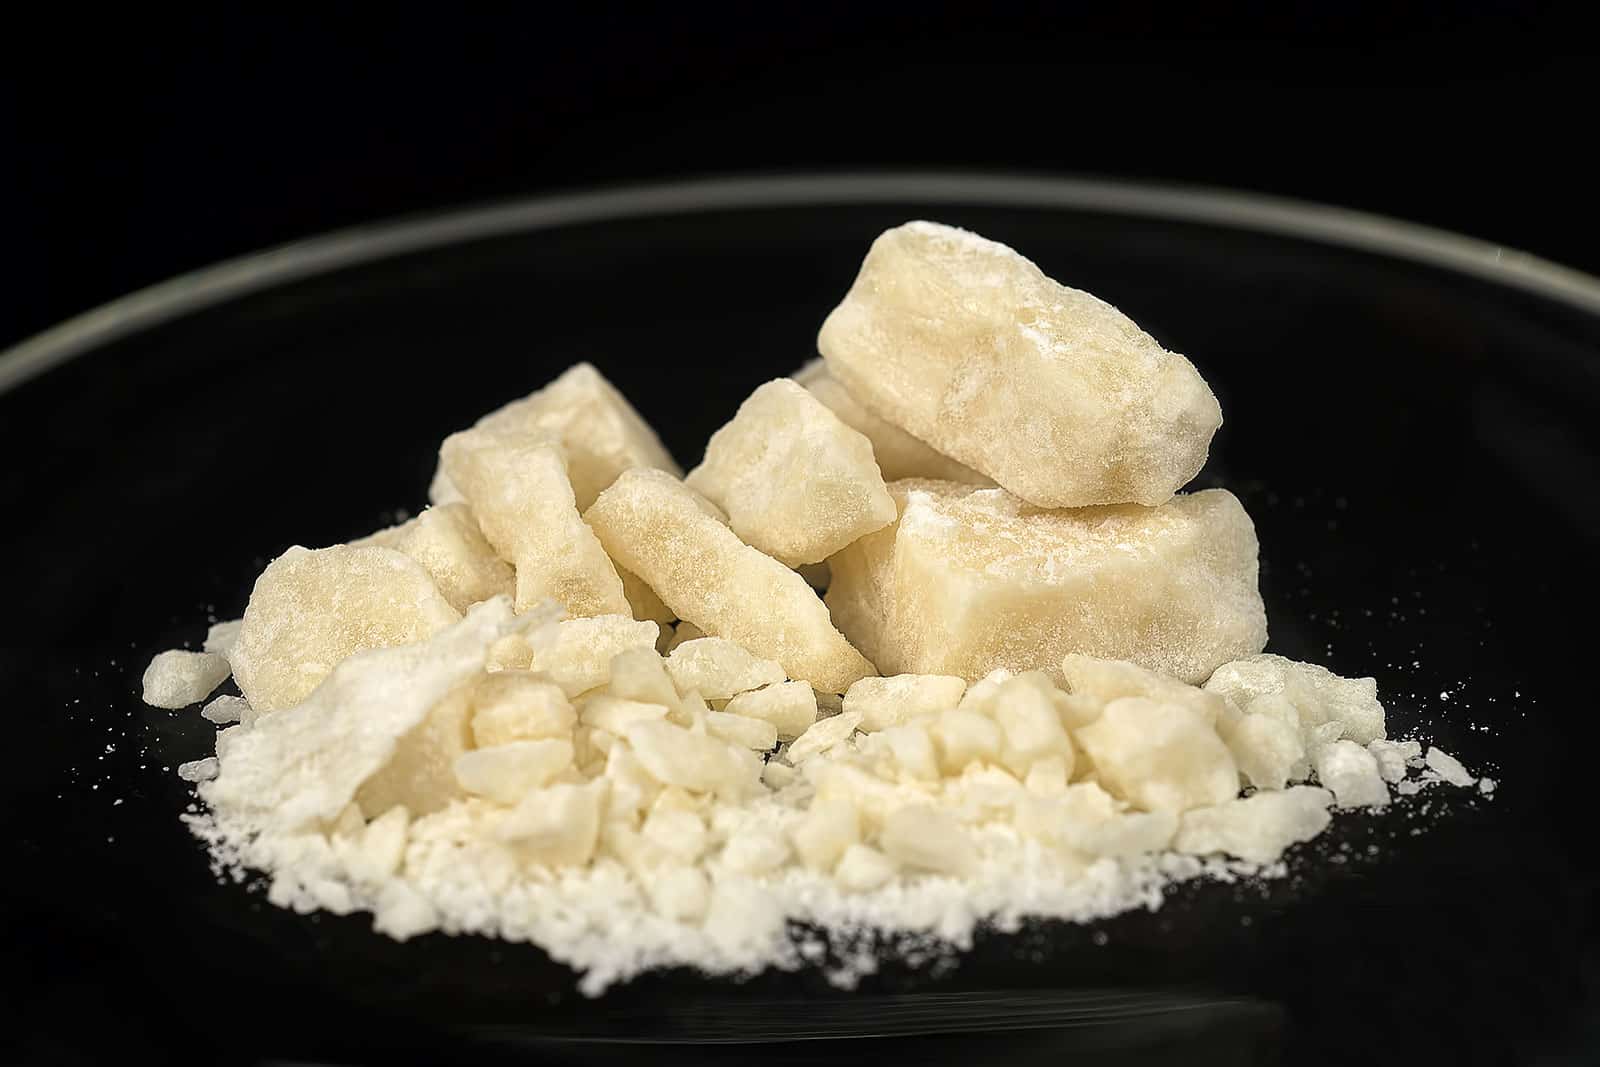 How Long Does a Crack Cocaine High Last?